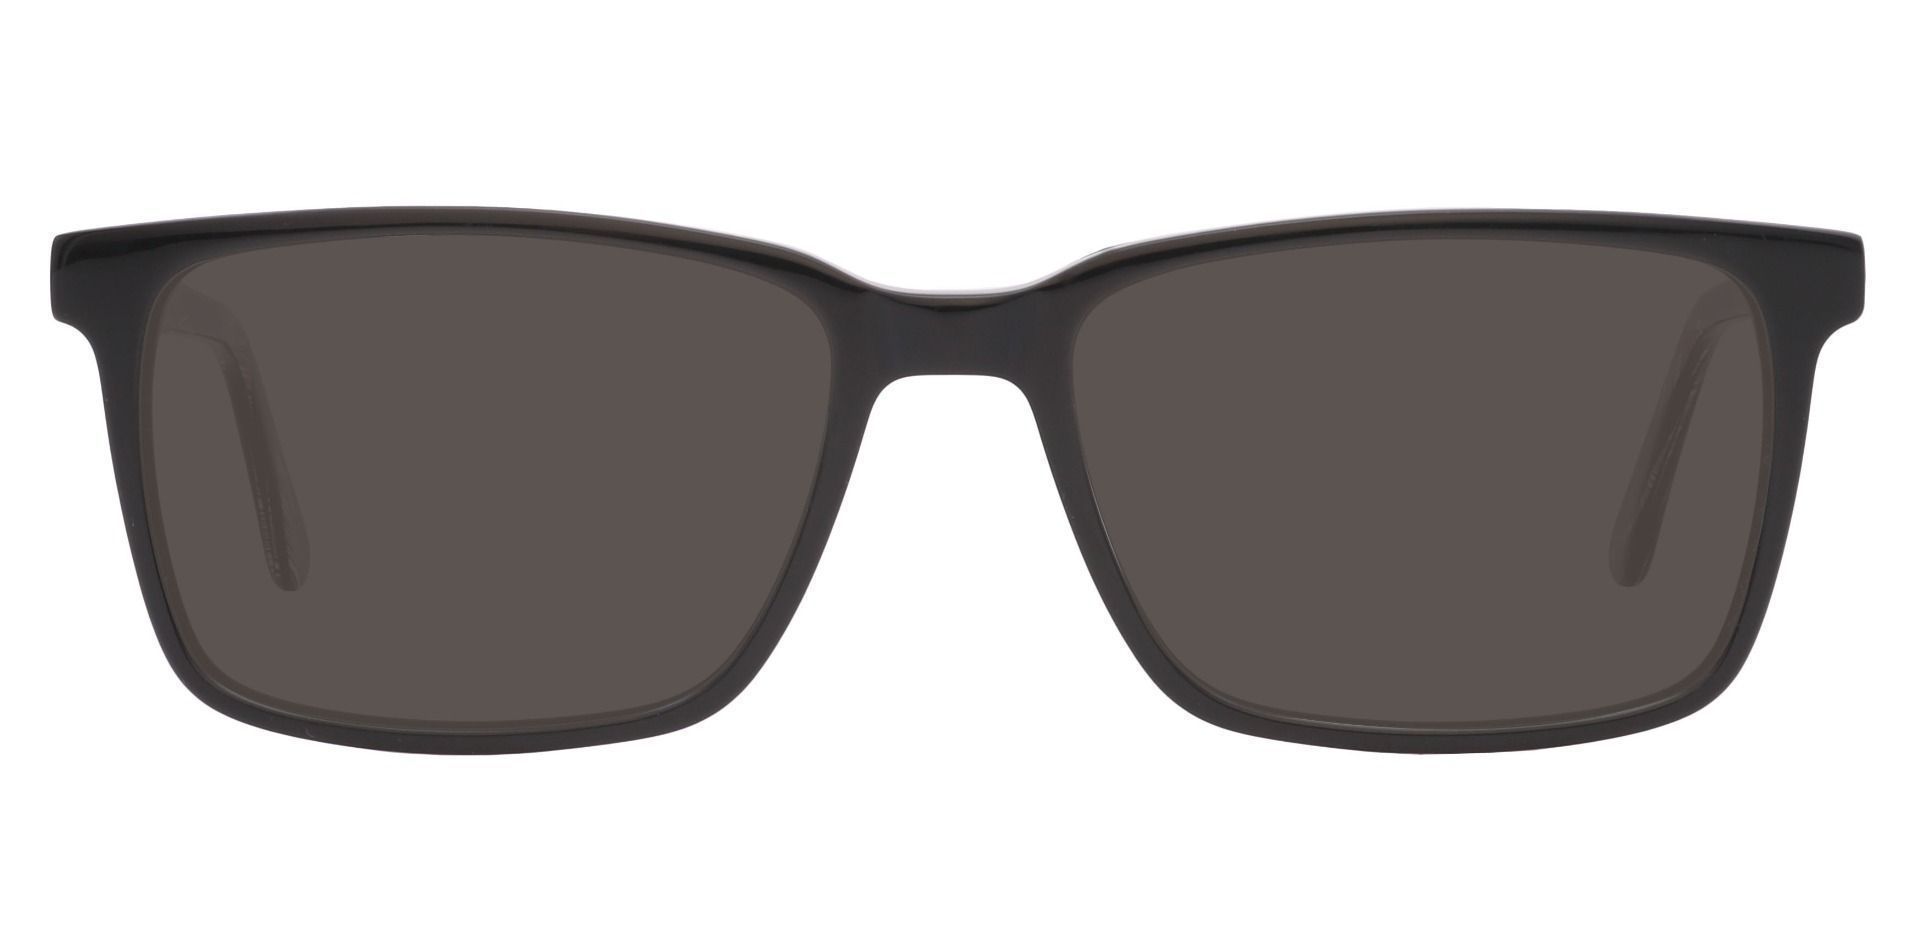 Venice Rectangle Reading Sunglasses - Black Frame With Gray Lenses